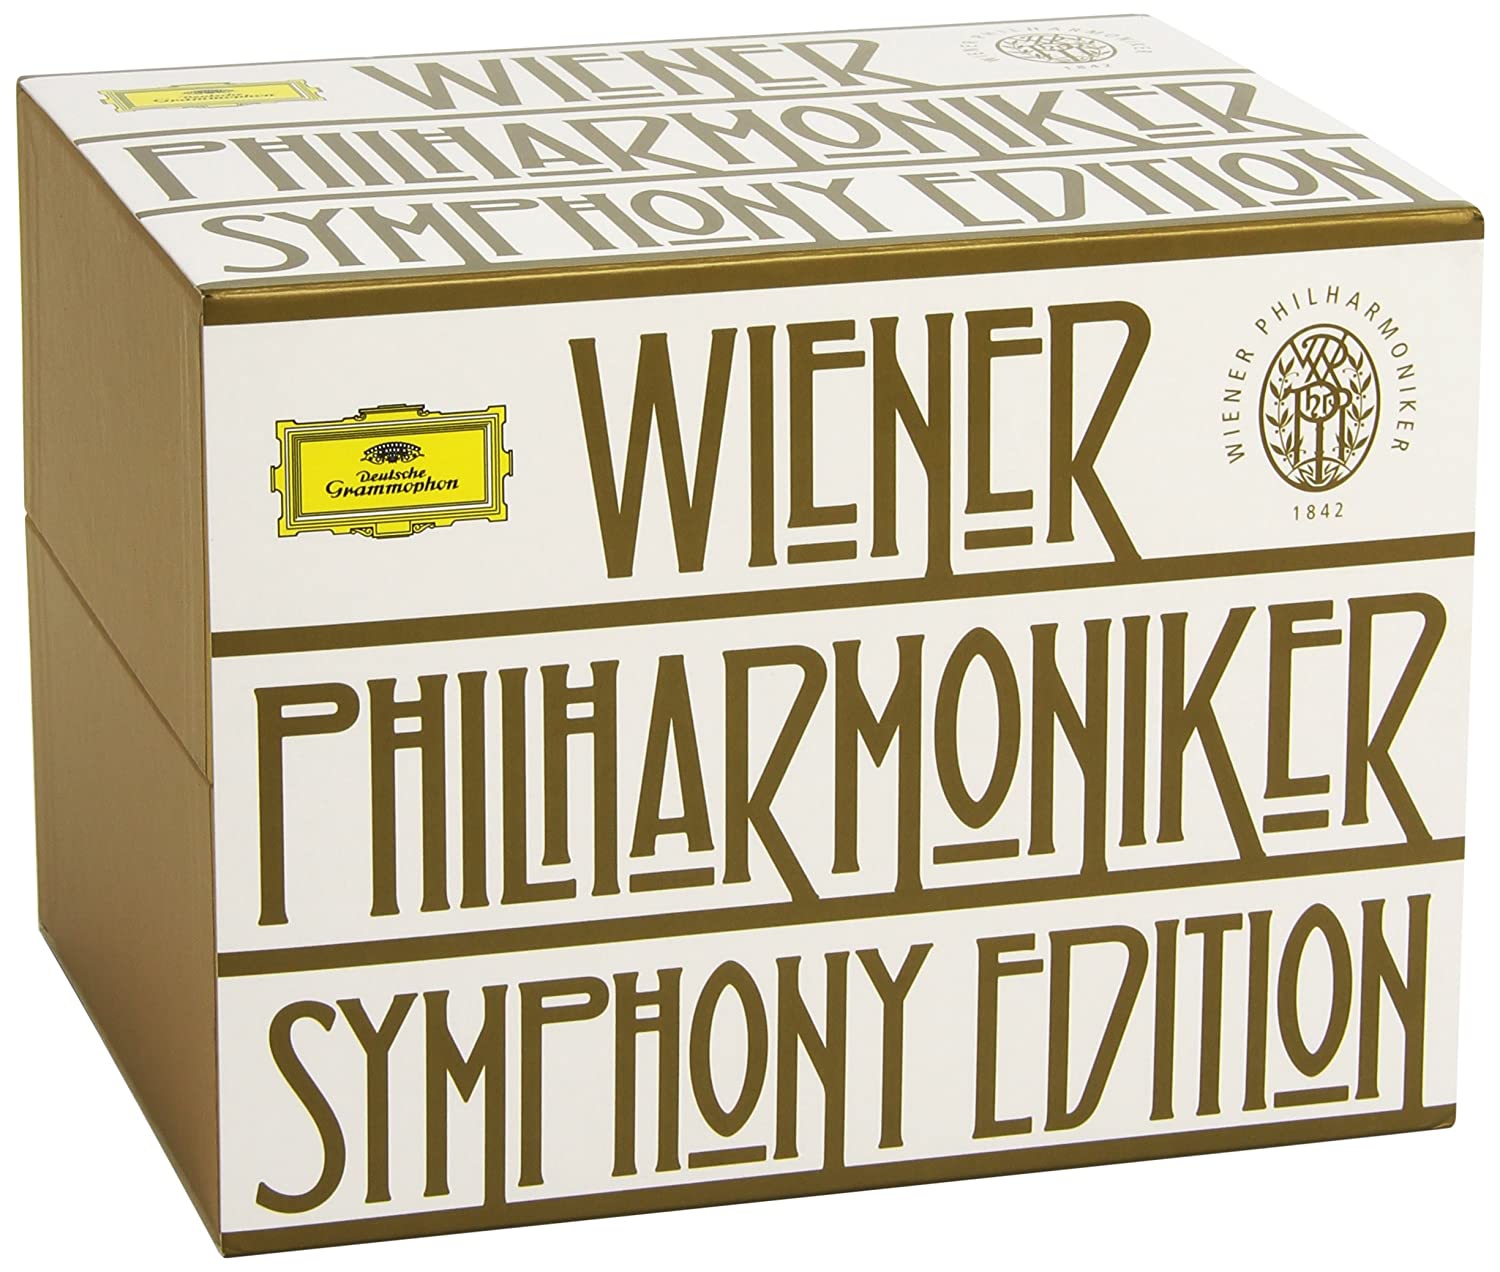 Wiener Philharmoniker Symphony Edition image